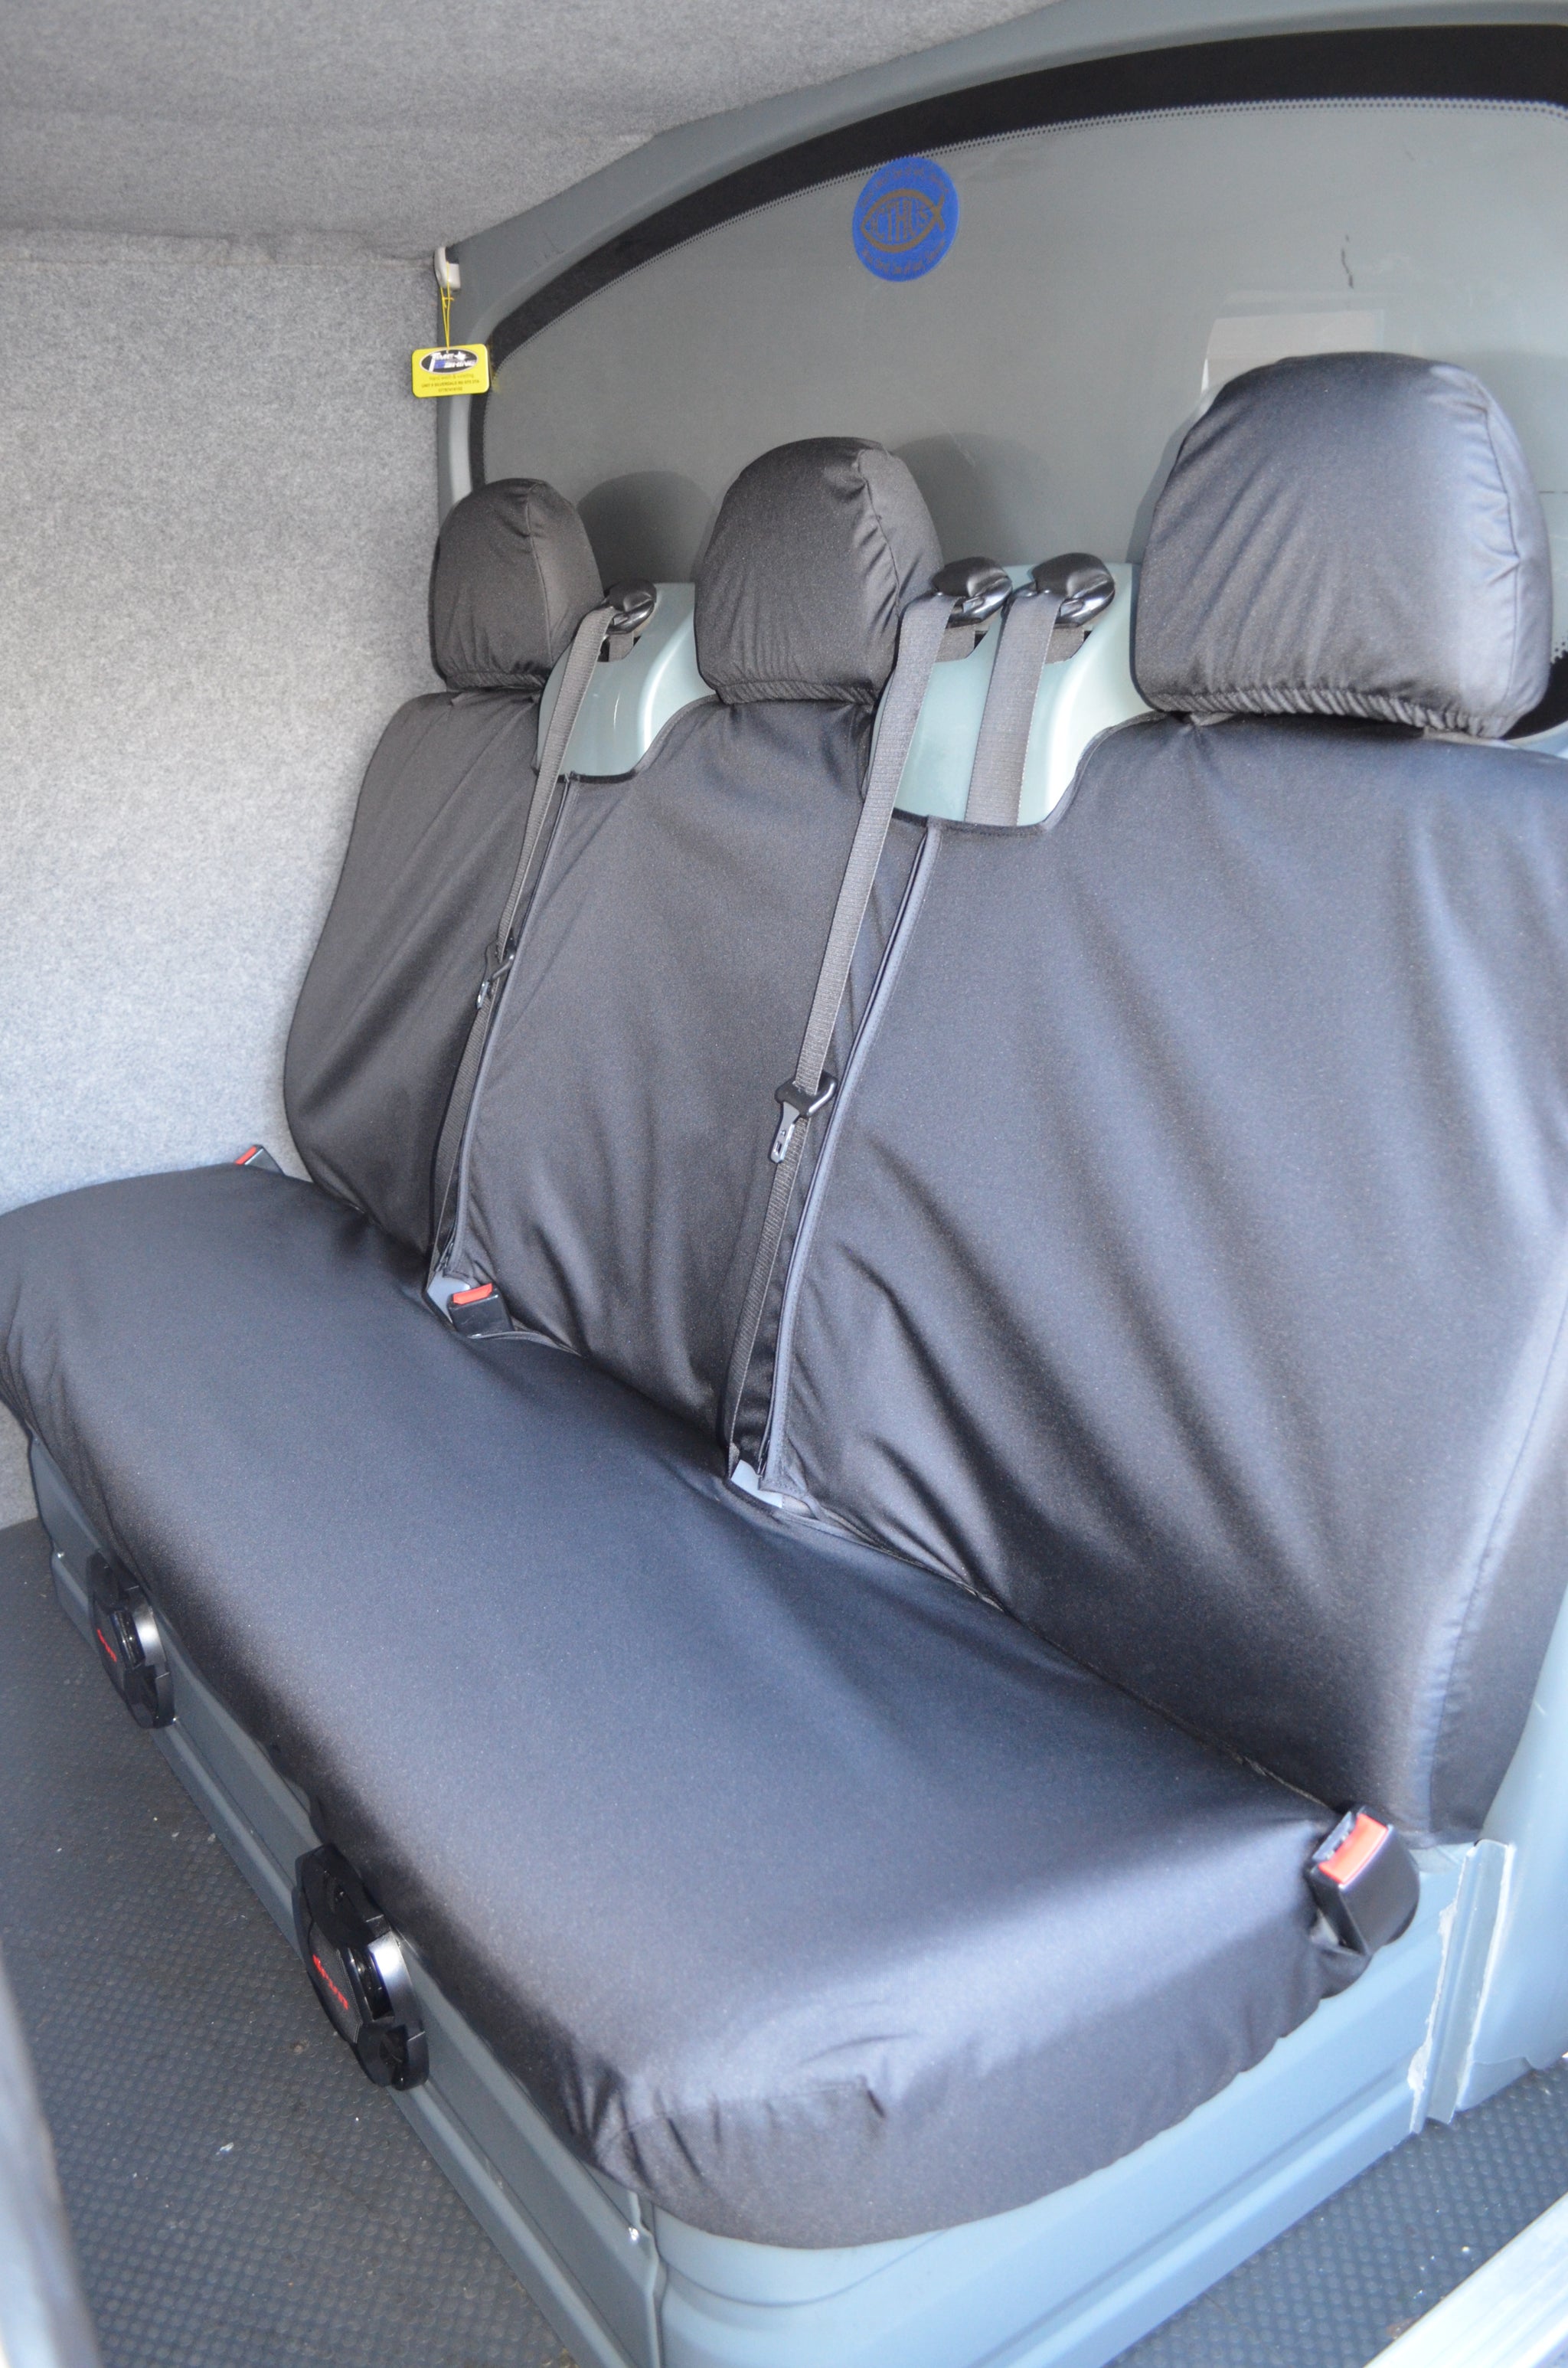 ford transit van seat covers